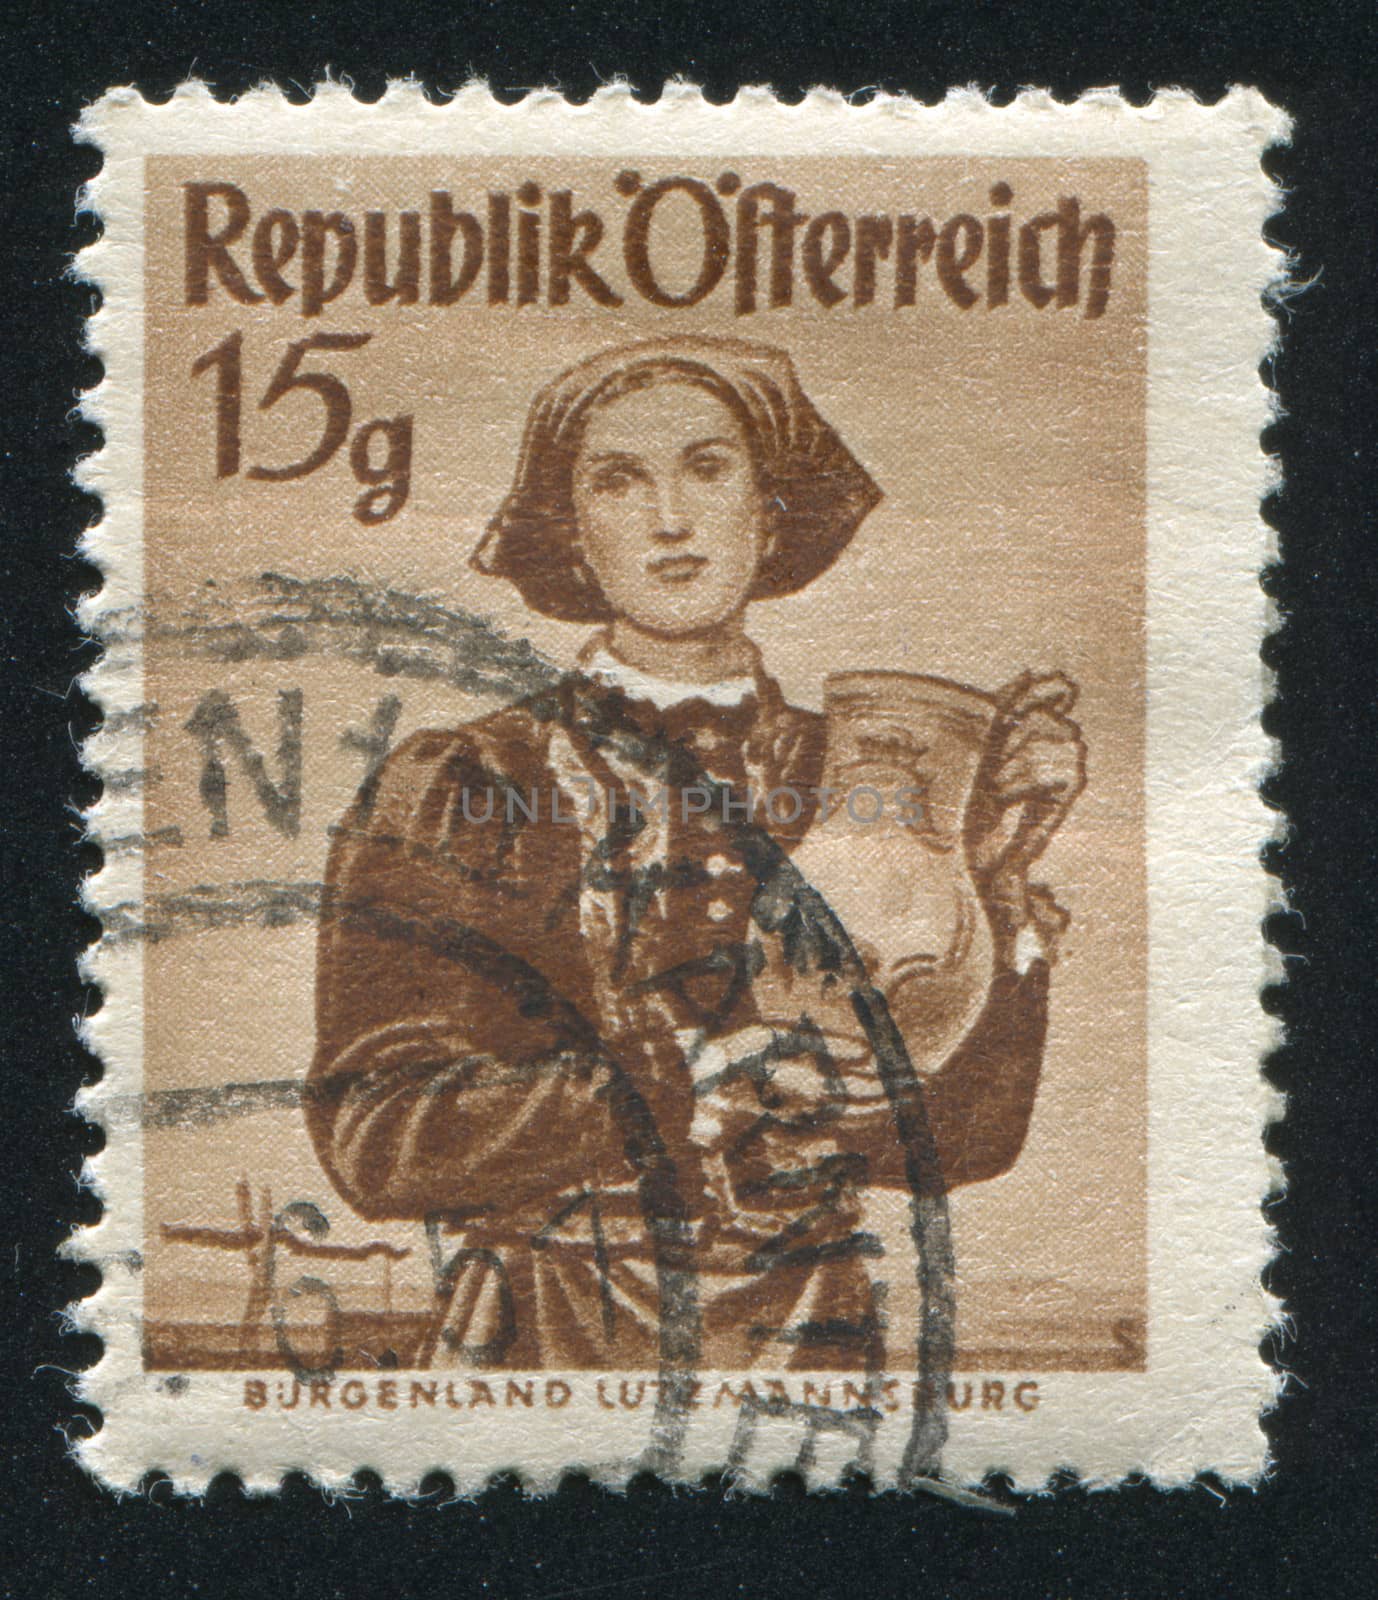 AUSTRIA - CIRCA 1948: stamp printed by Austria, shows Woman in Austian costumes, circa 1948